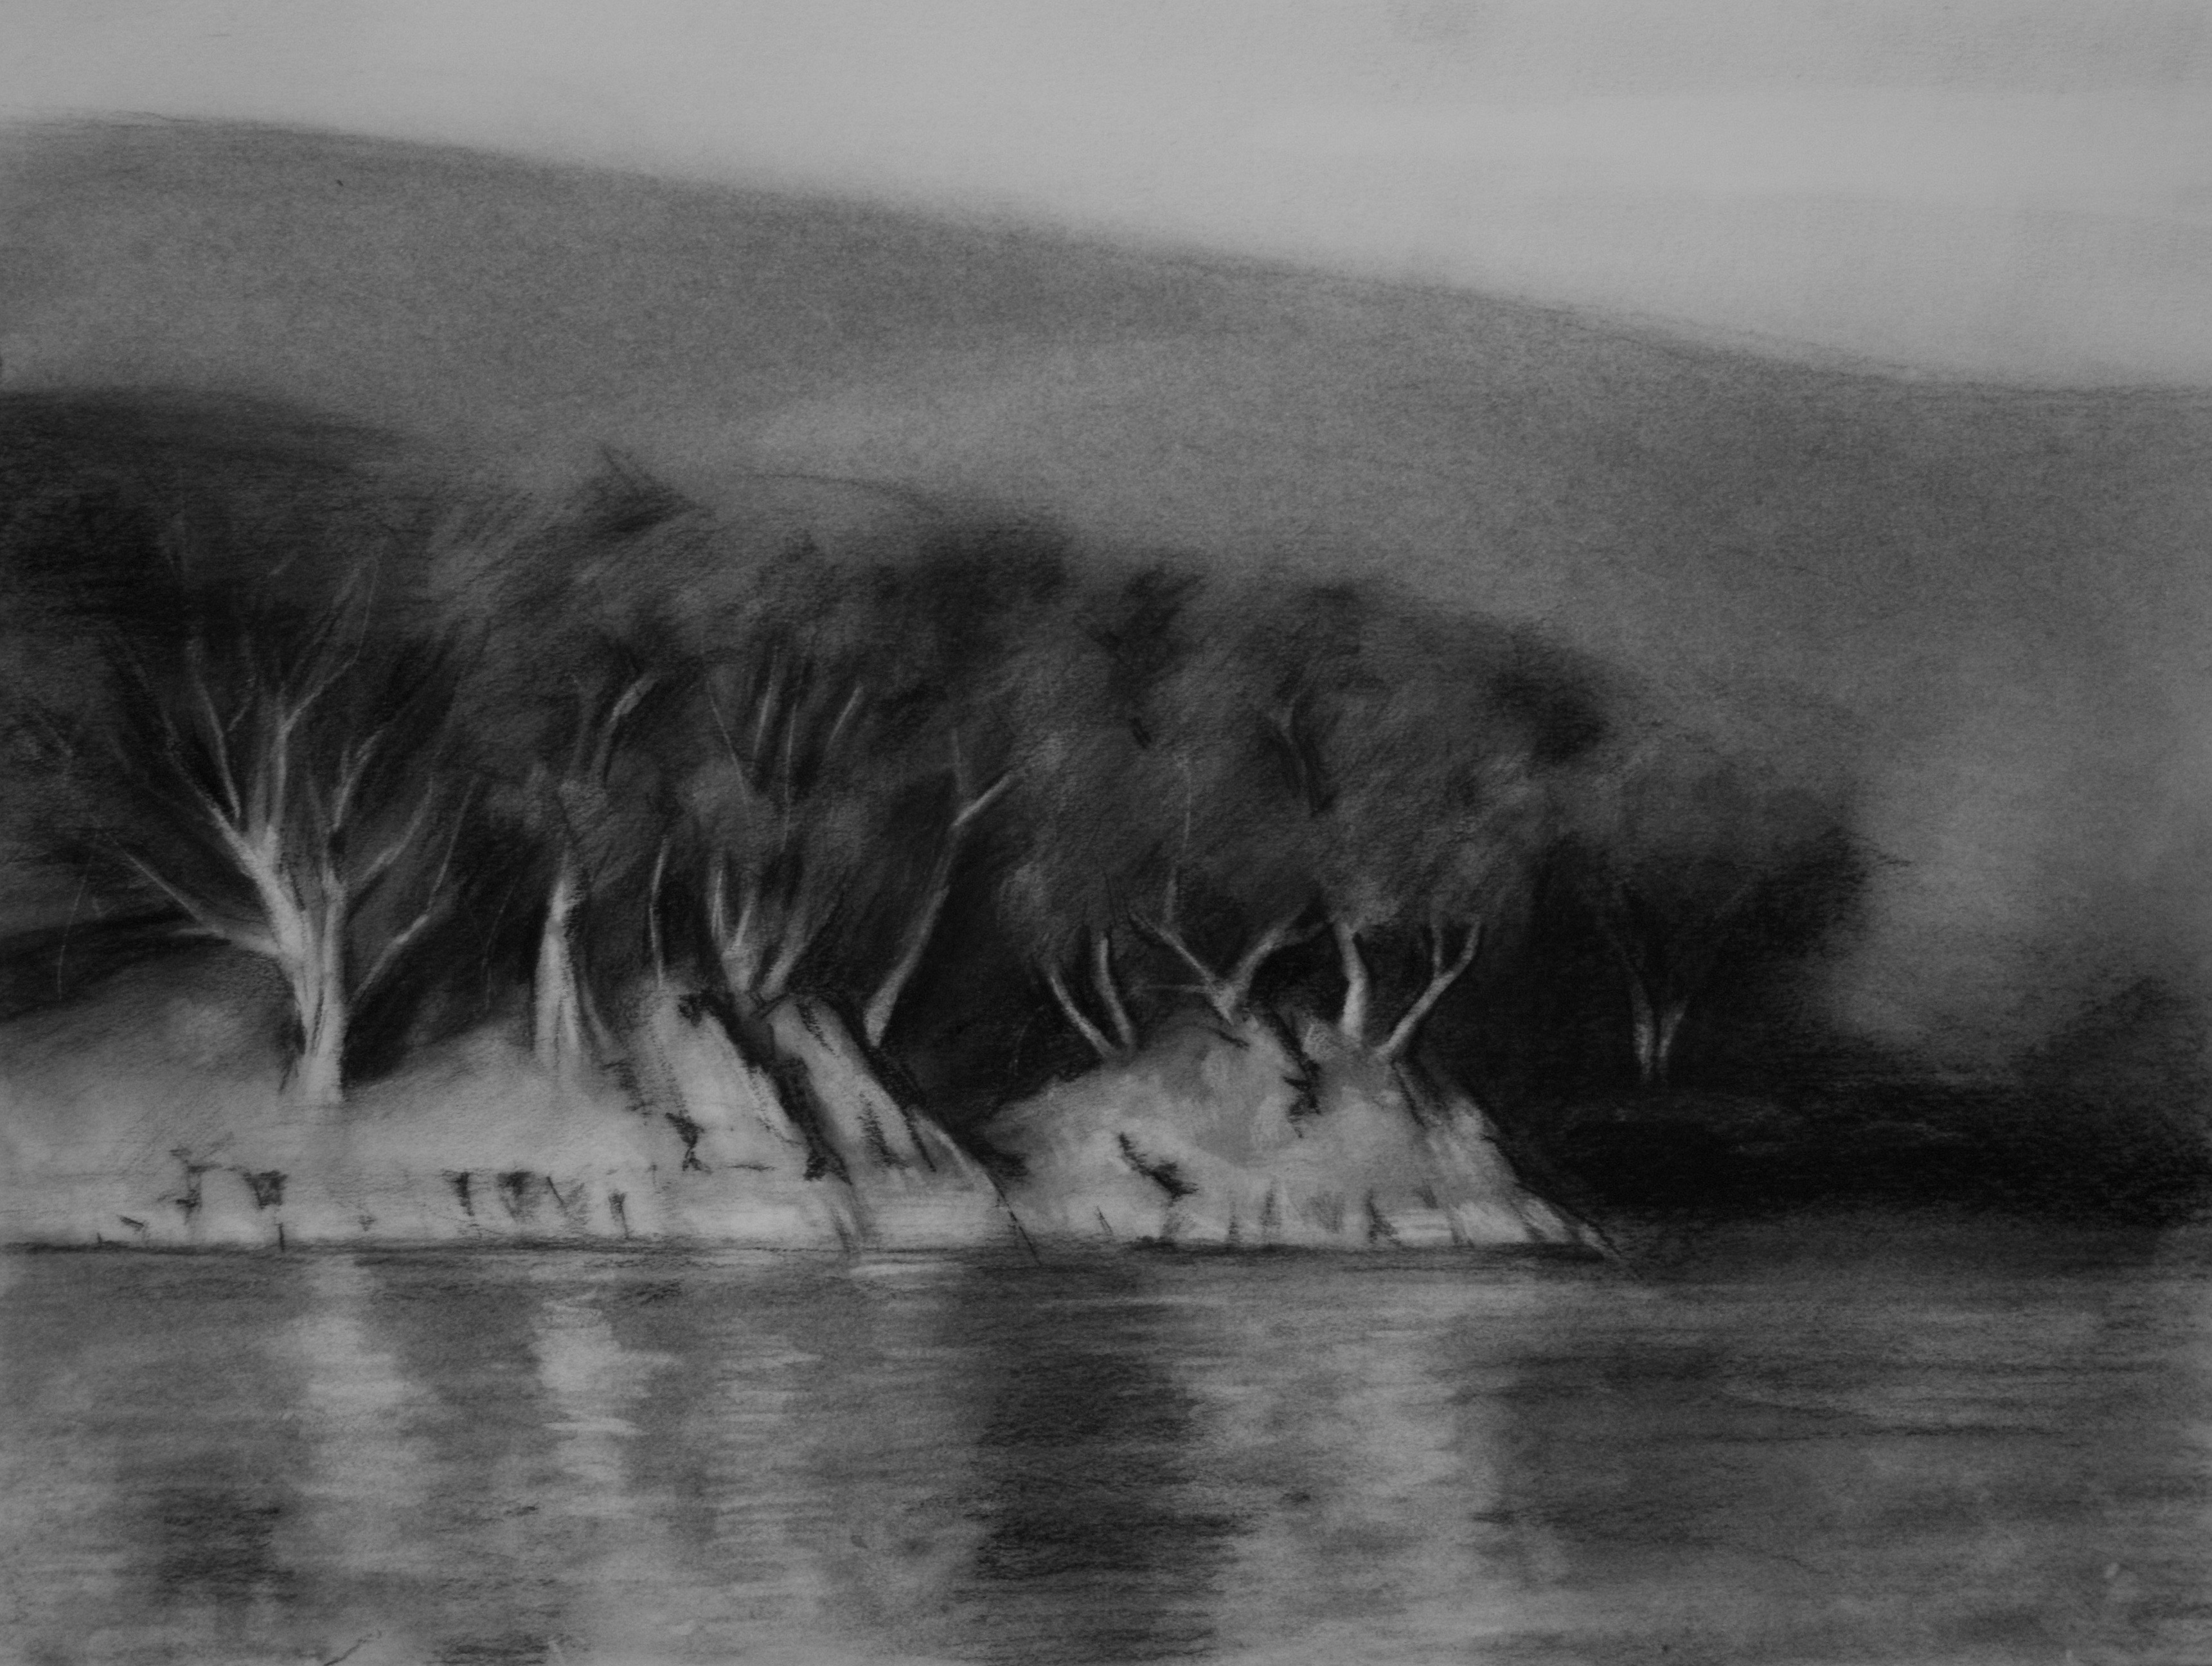 Umberumberka Reservoir (Study)  by Michael Simms | Lethbridge Landscape Prize 2022 Finalists | Lethbridge Gallery